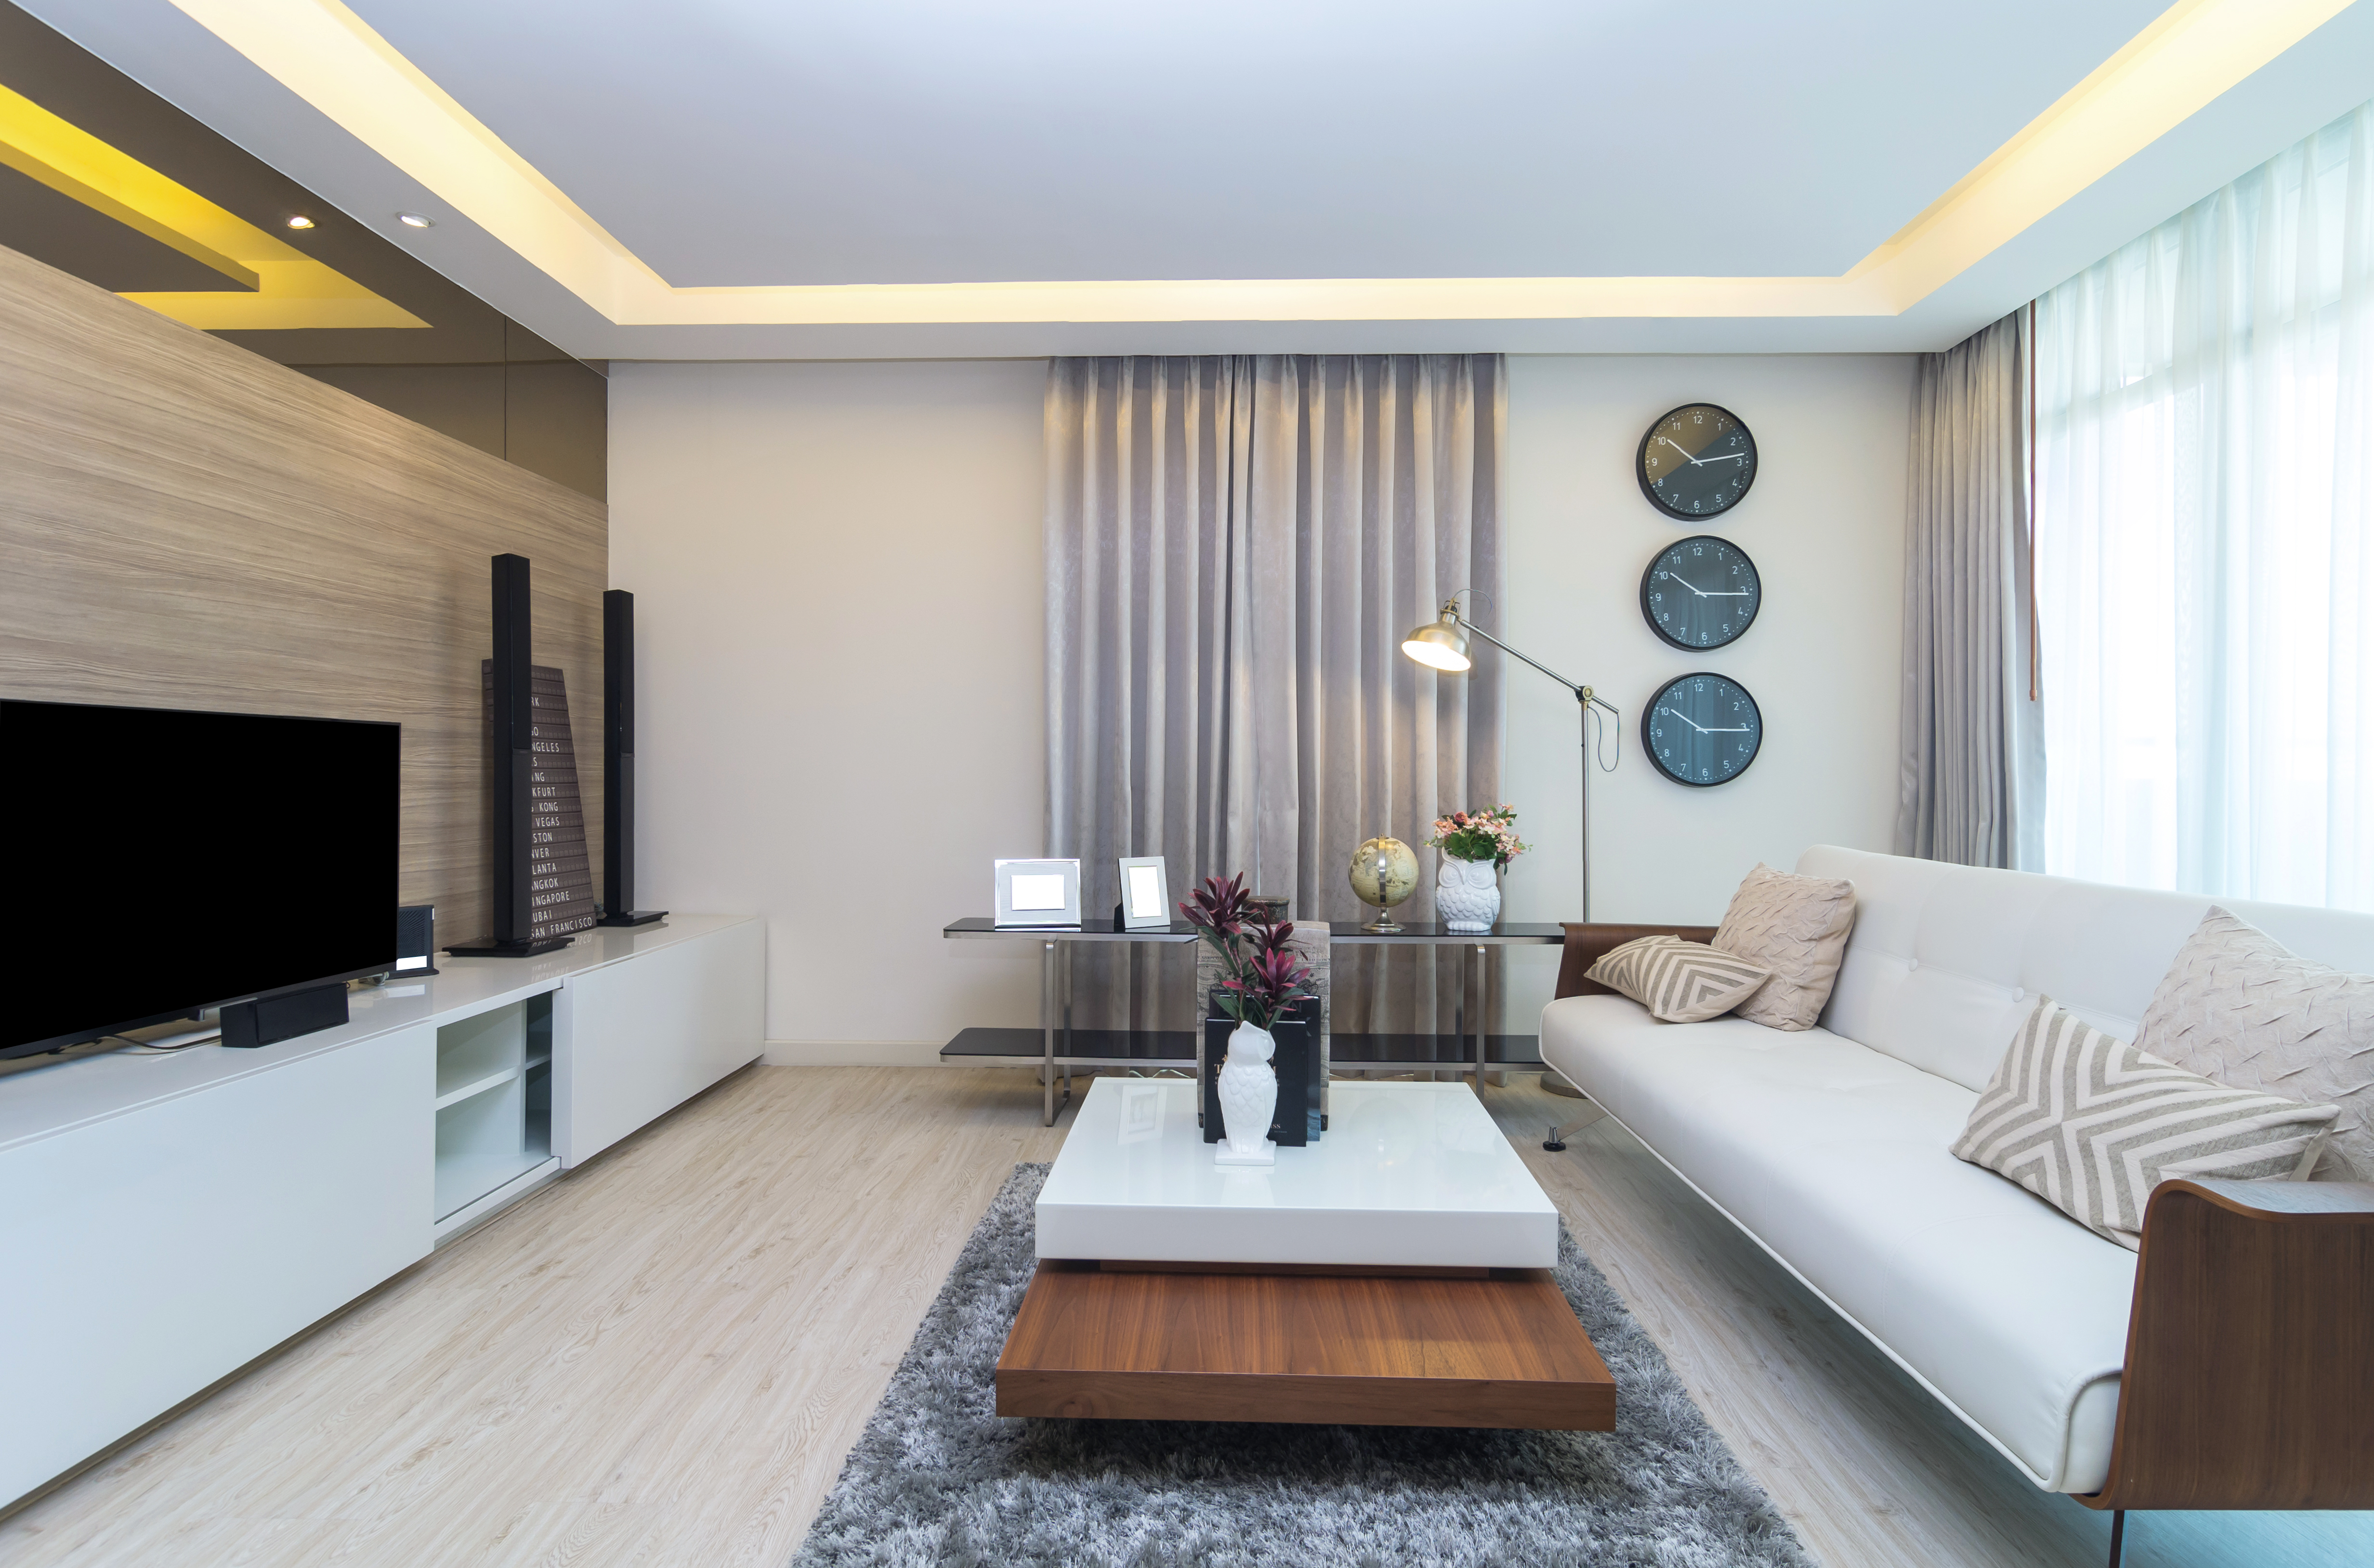 luxury-interior-living-room-yam8vrx.jpg